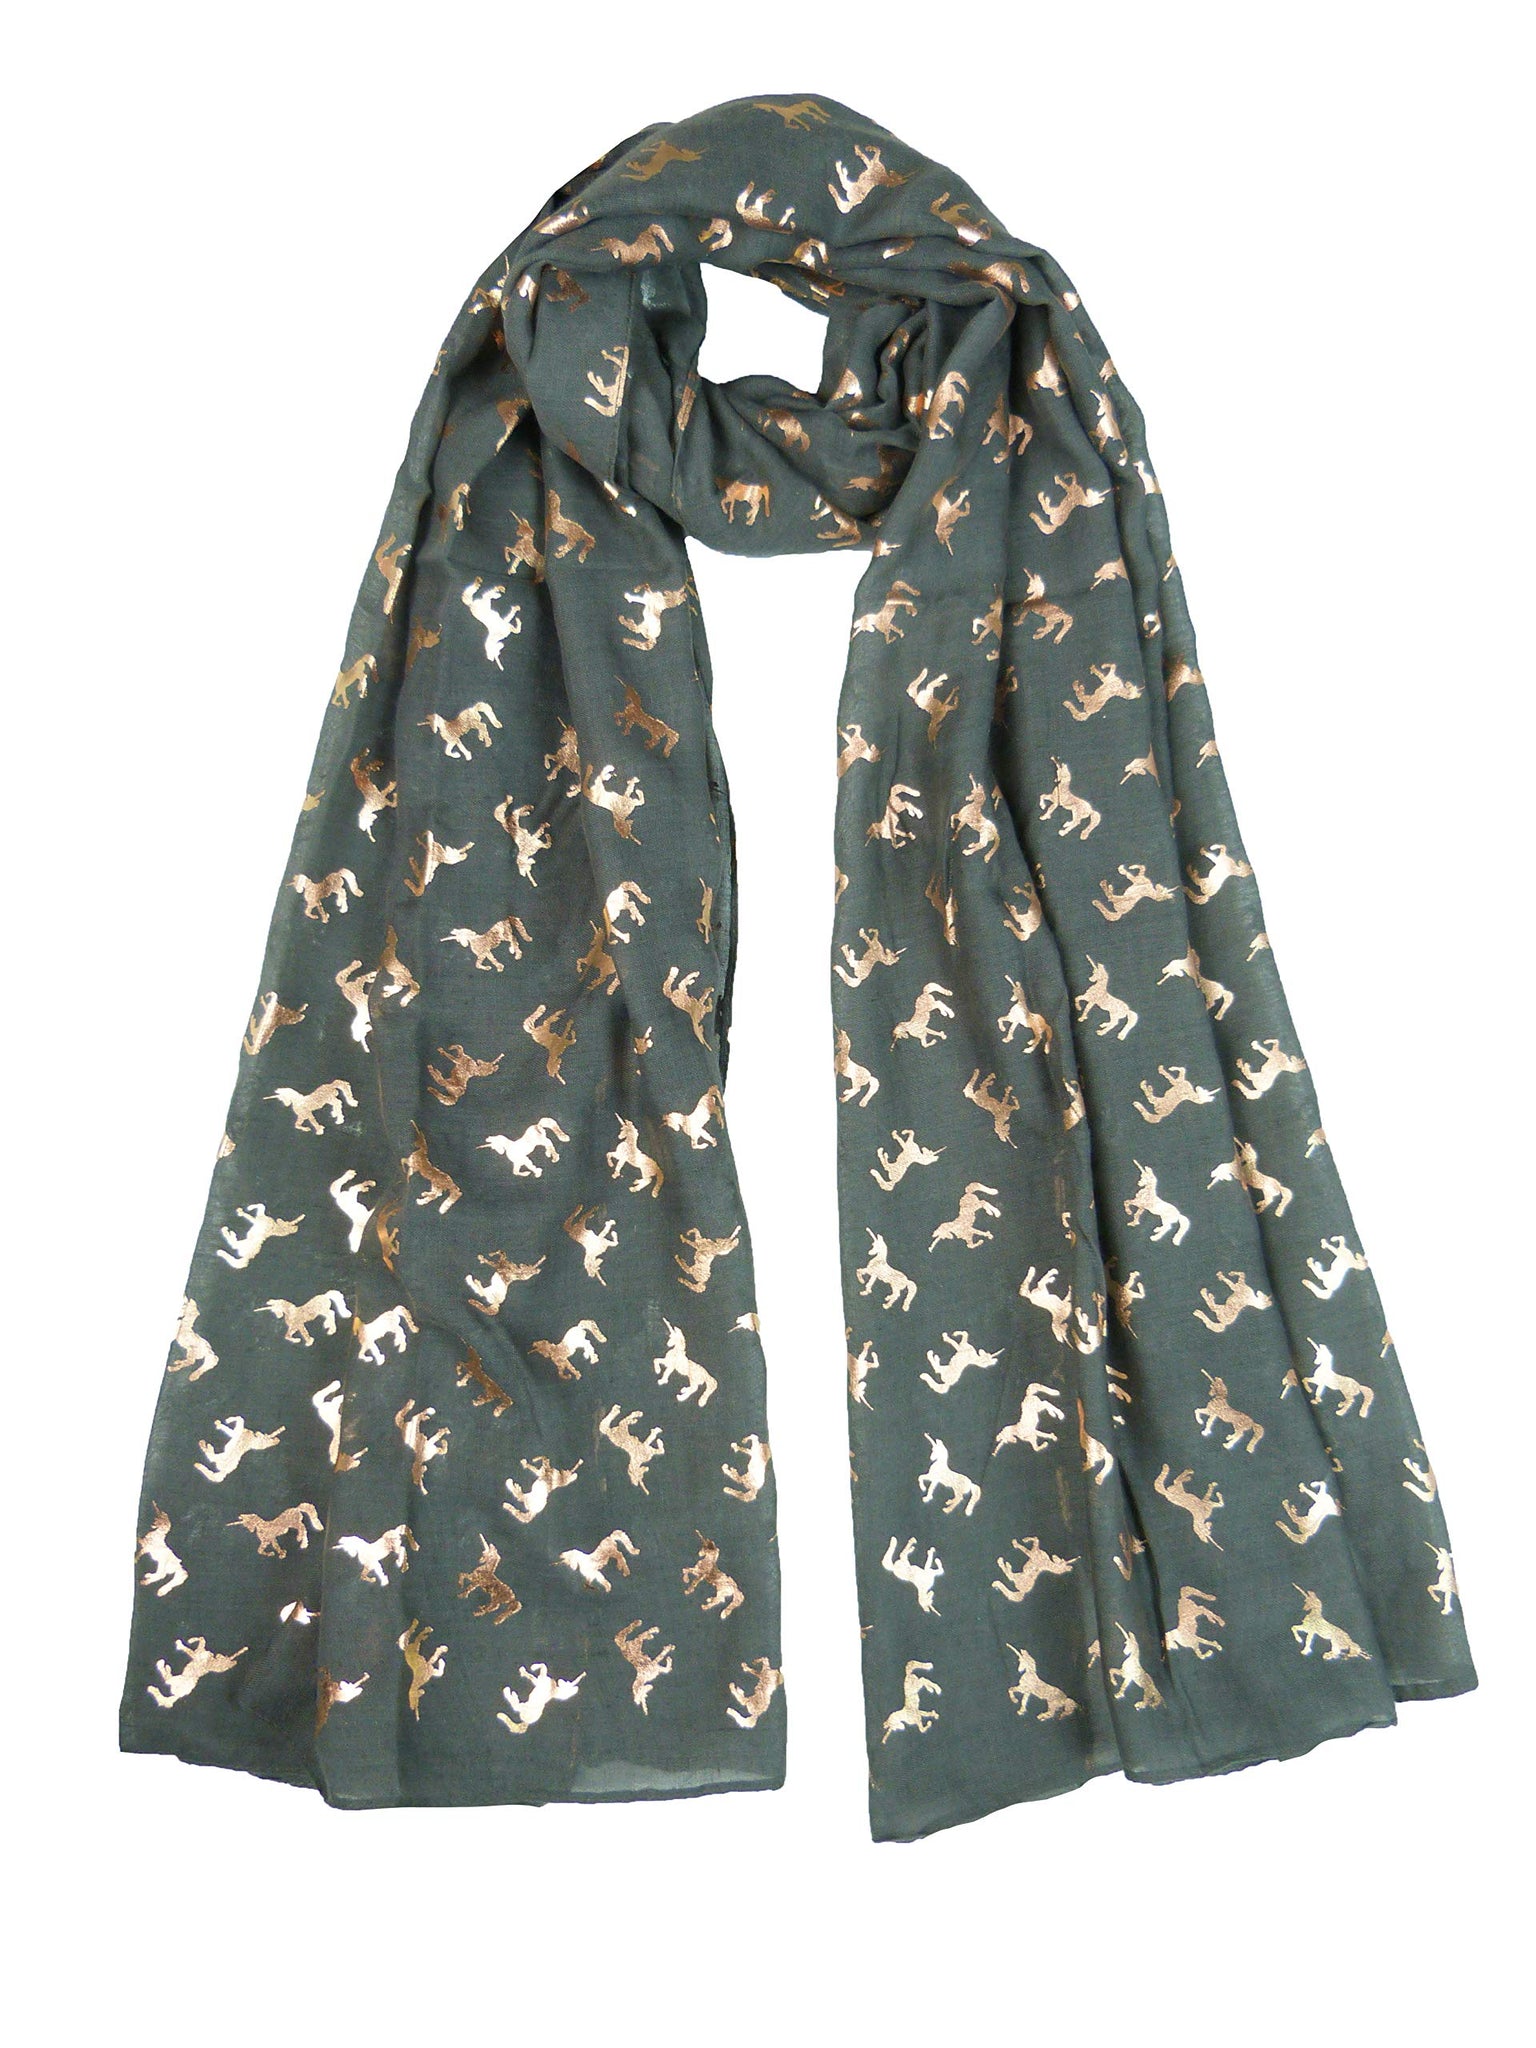 Unicorn Print Scarf | Wraps | Shawl | Soft Scarves For Women | Grey & Rose Gold 